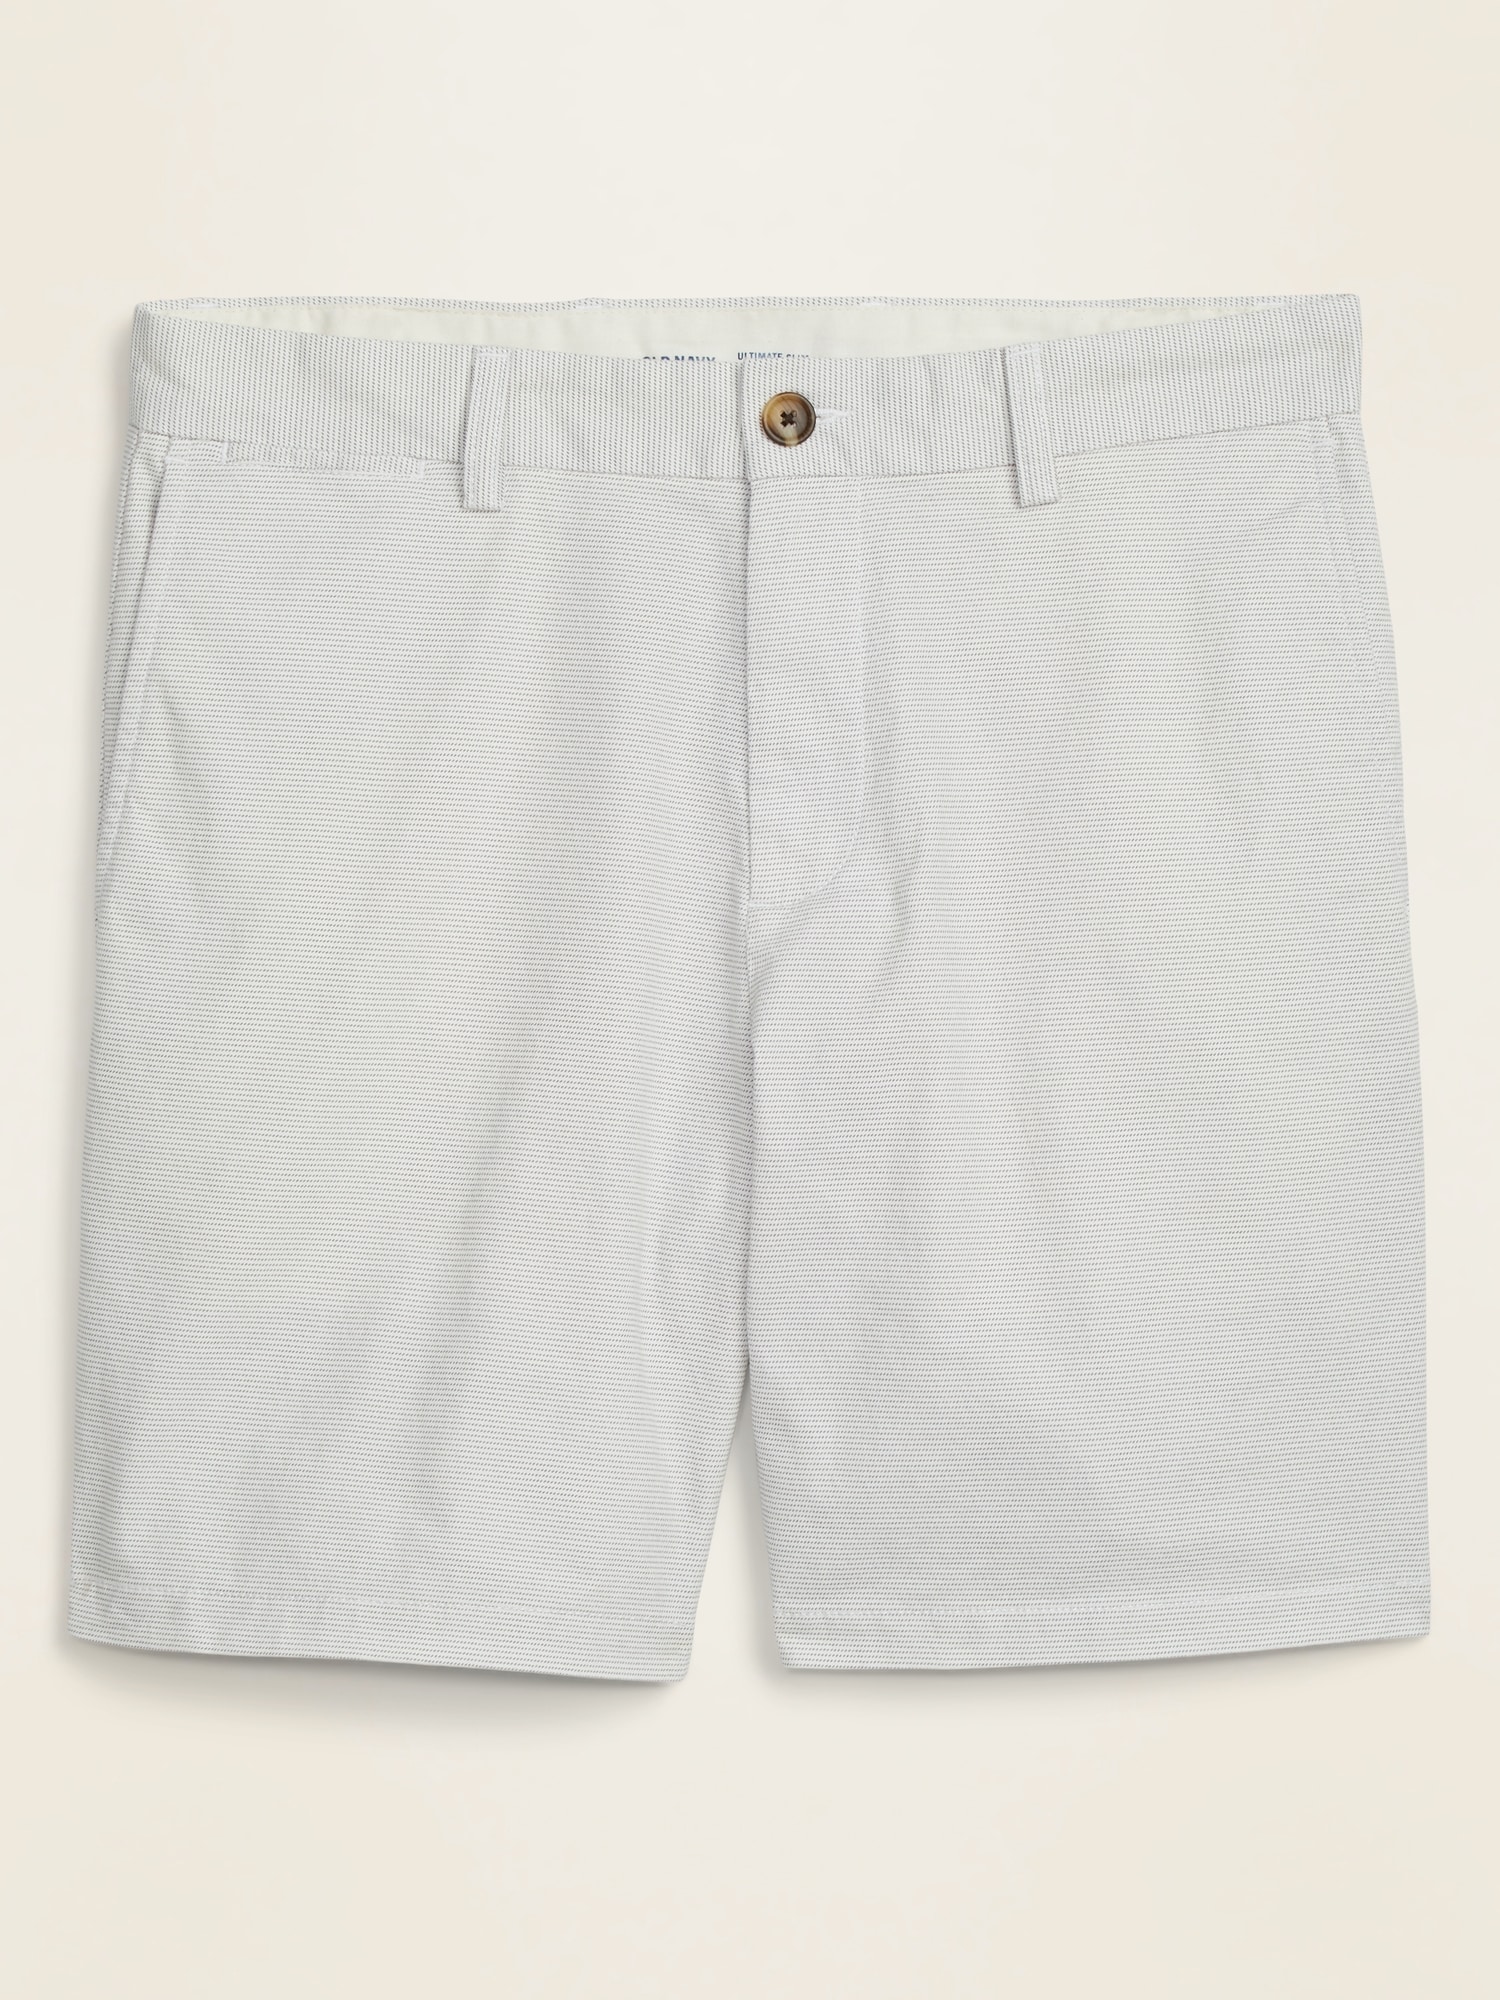 Slim Ultimate Shorts - 8-inch inseam